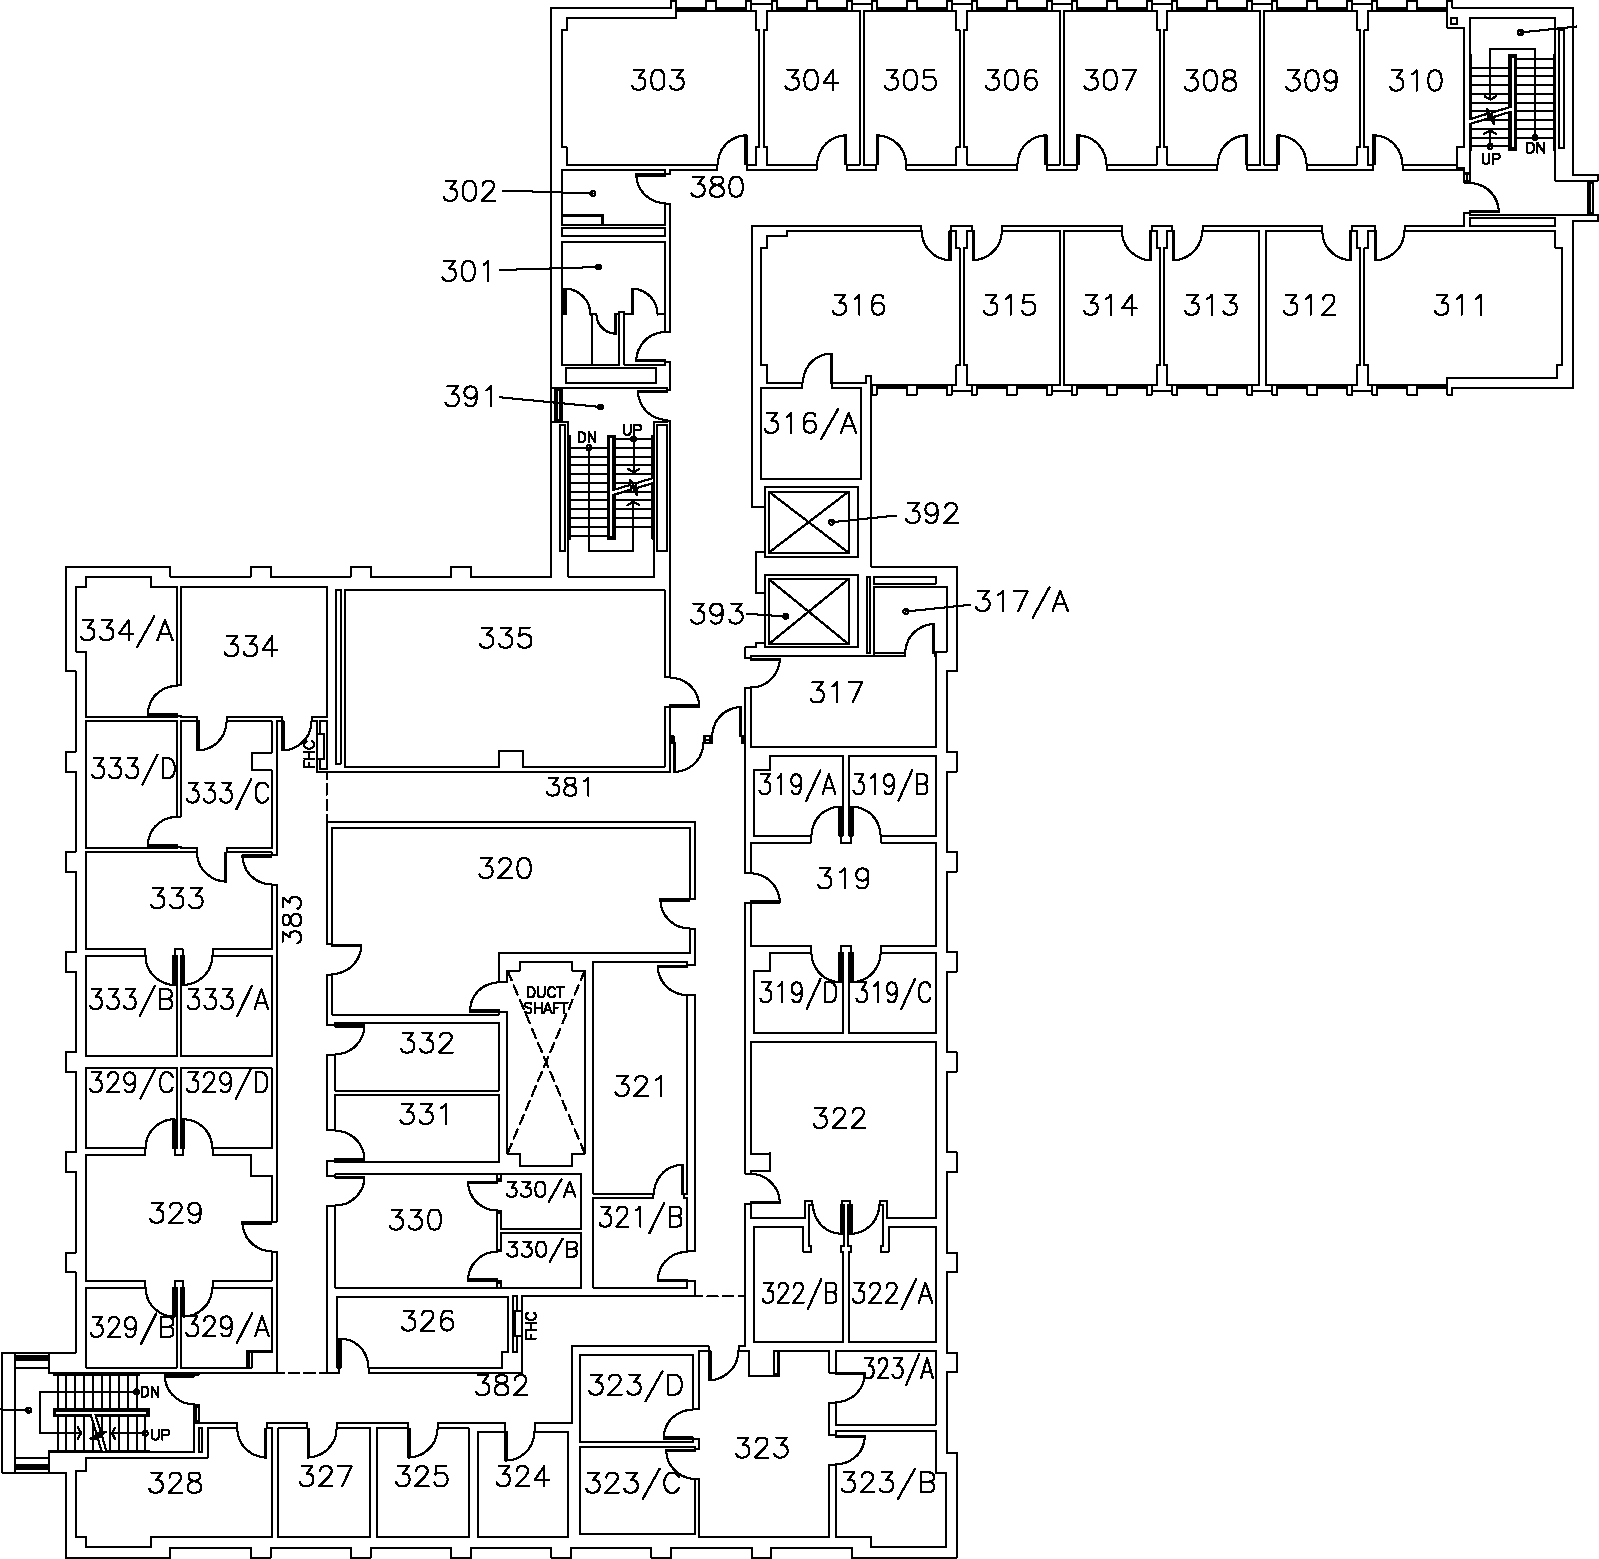 Psychology Building - Third Floor Map